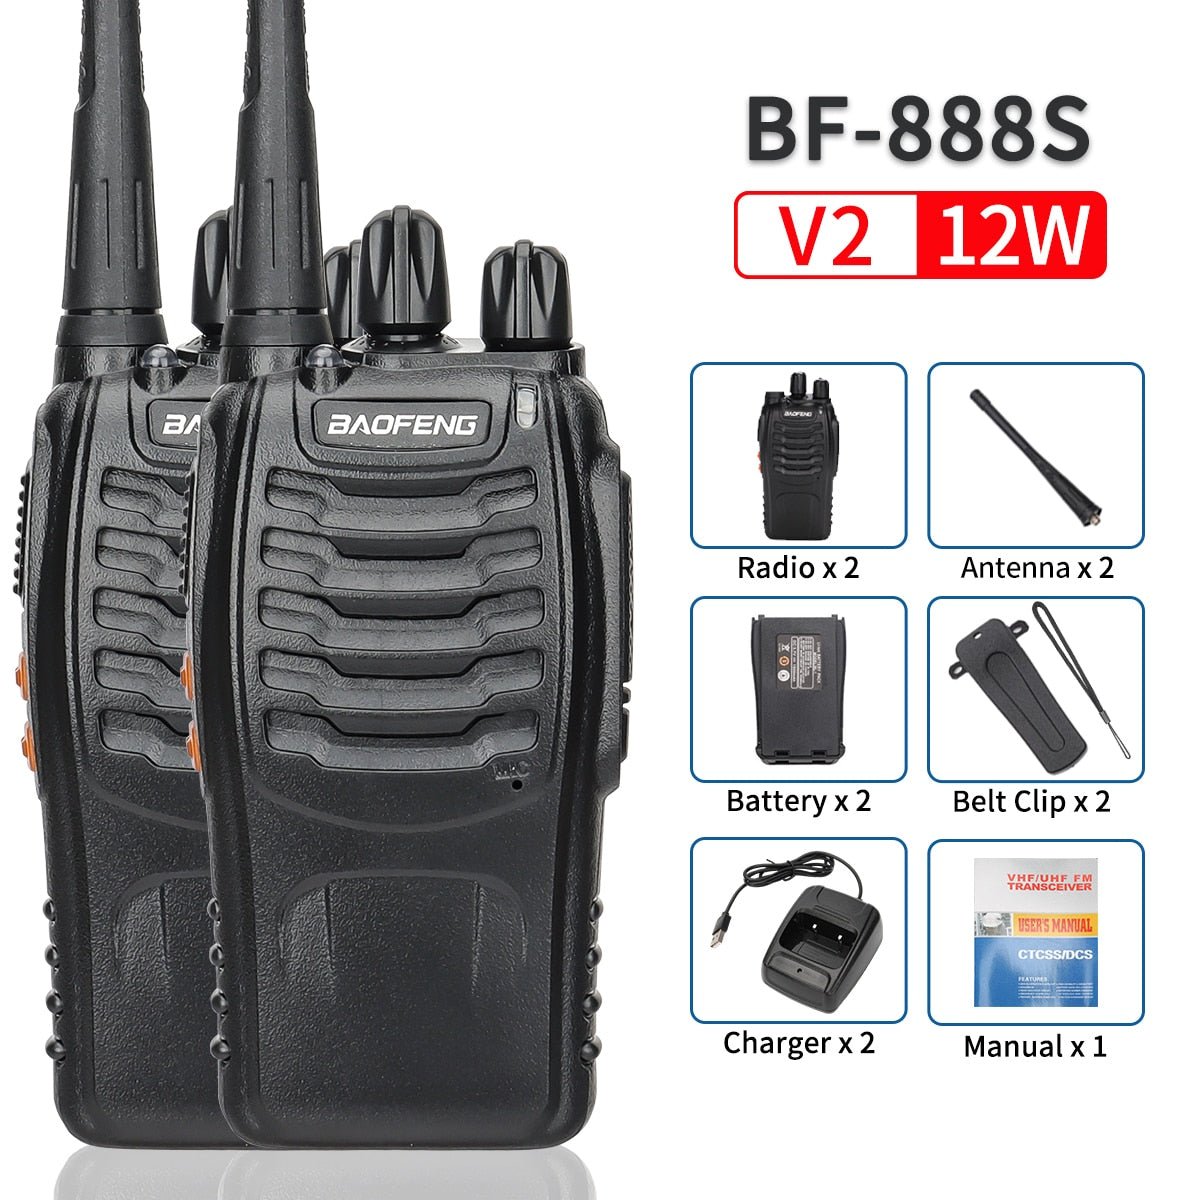 2PCS Baofeng BF-888S Walkie Talkie UHF 400-470MHz 888s 100km² Long Range